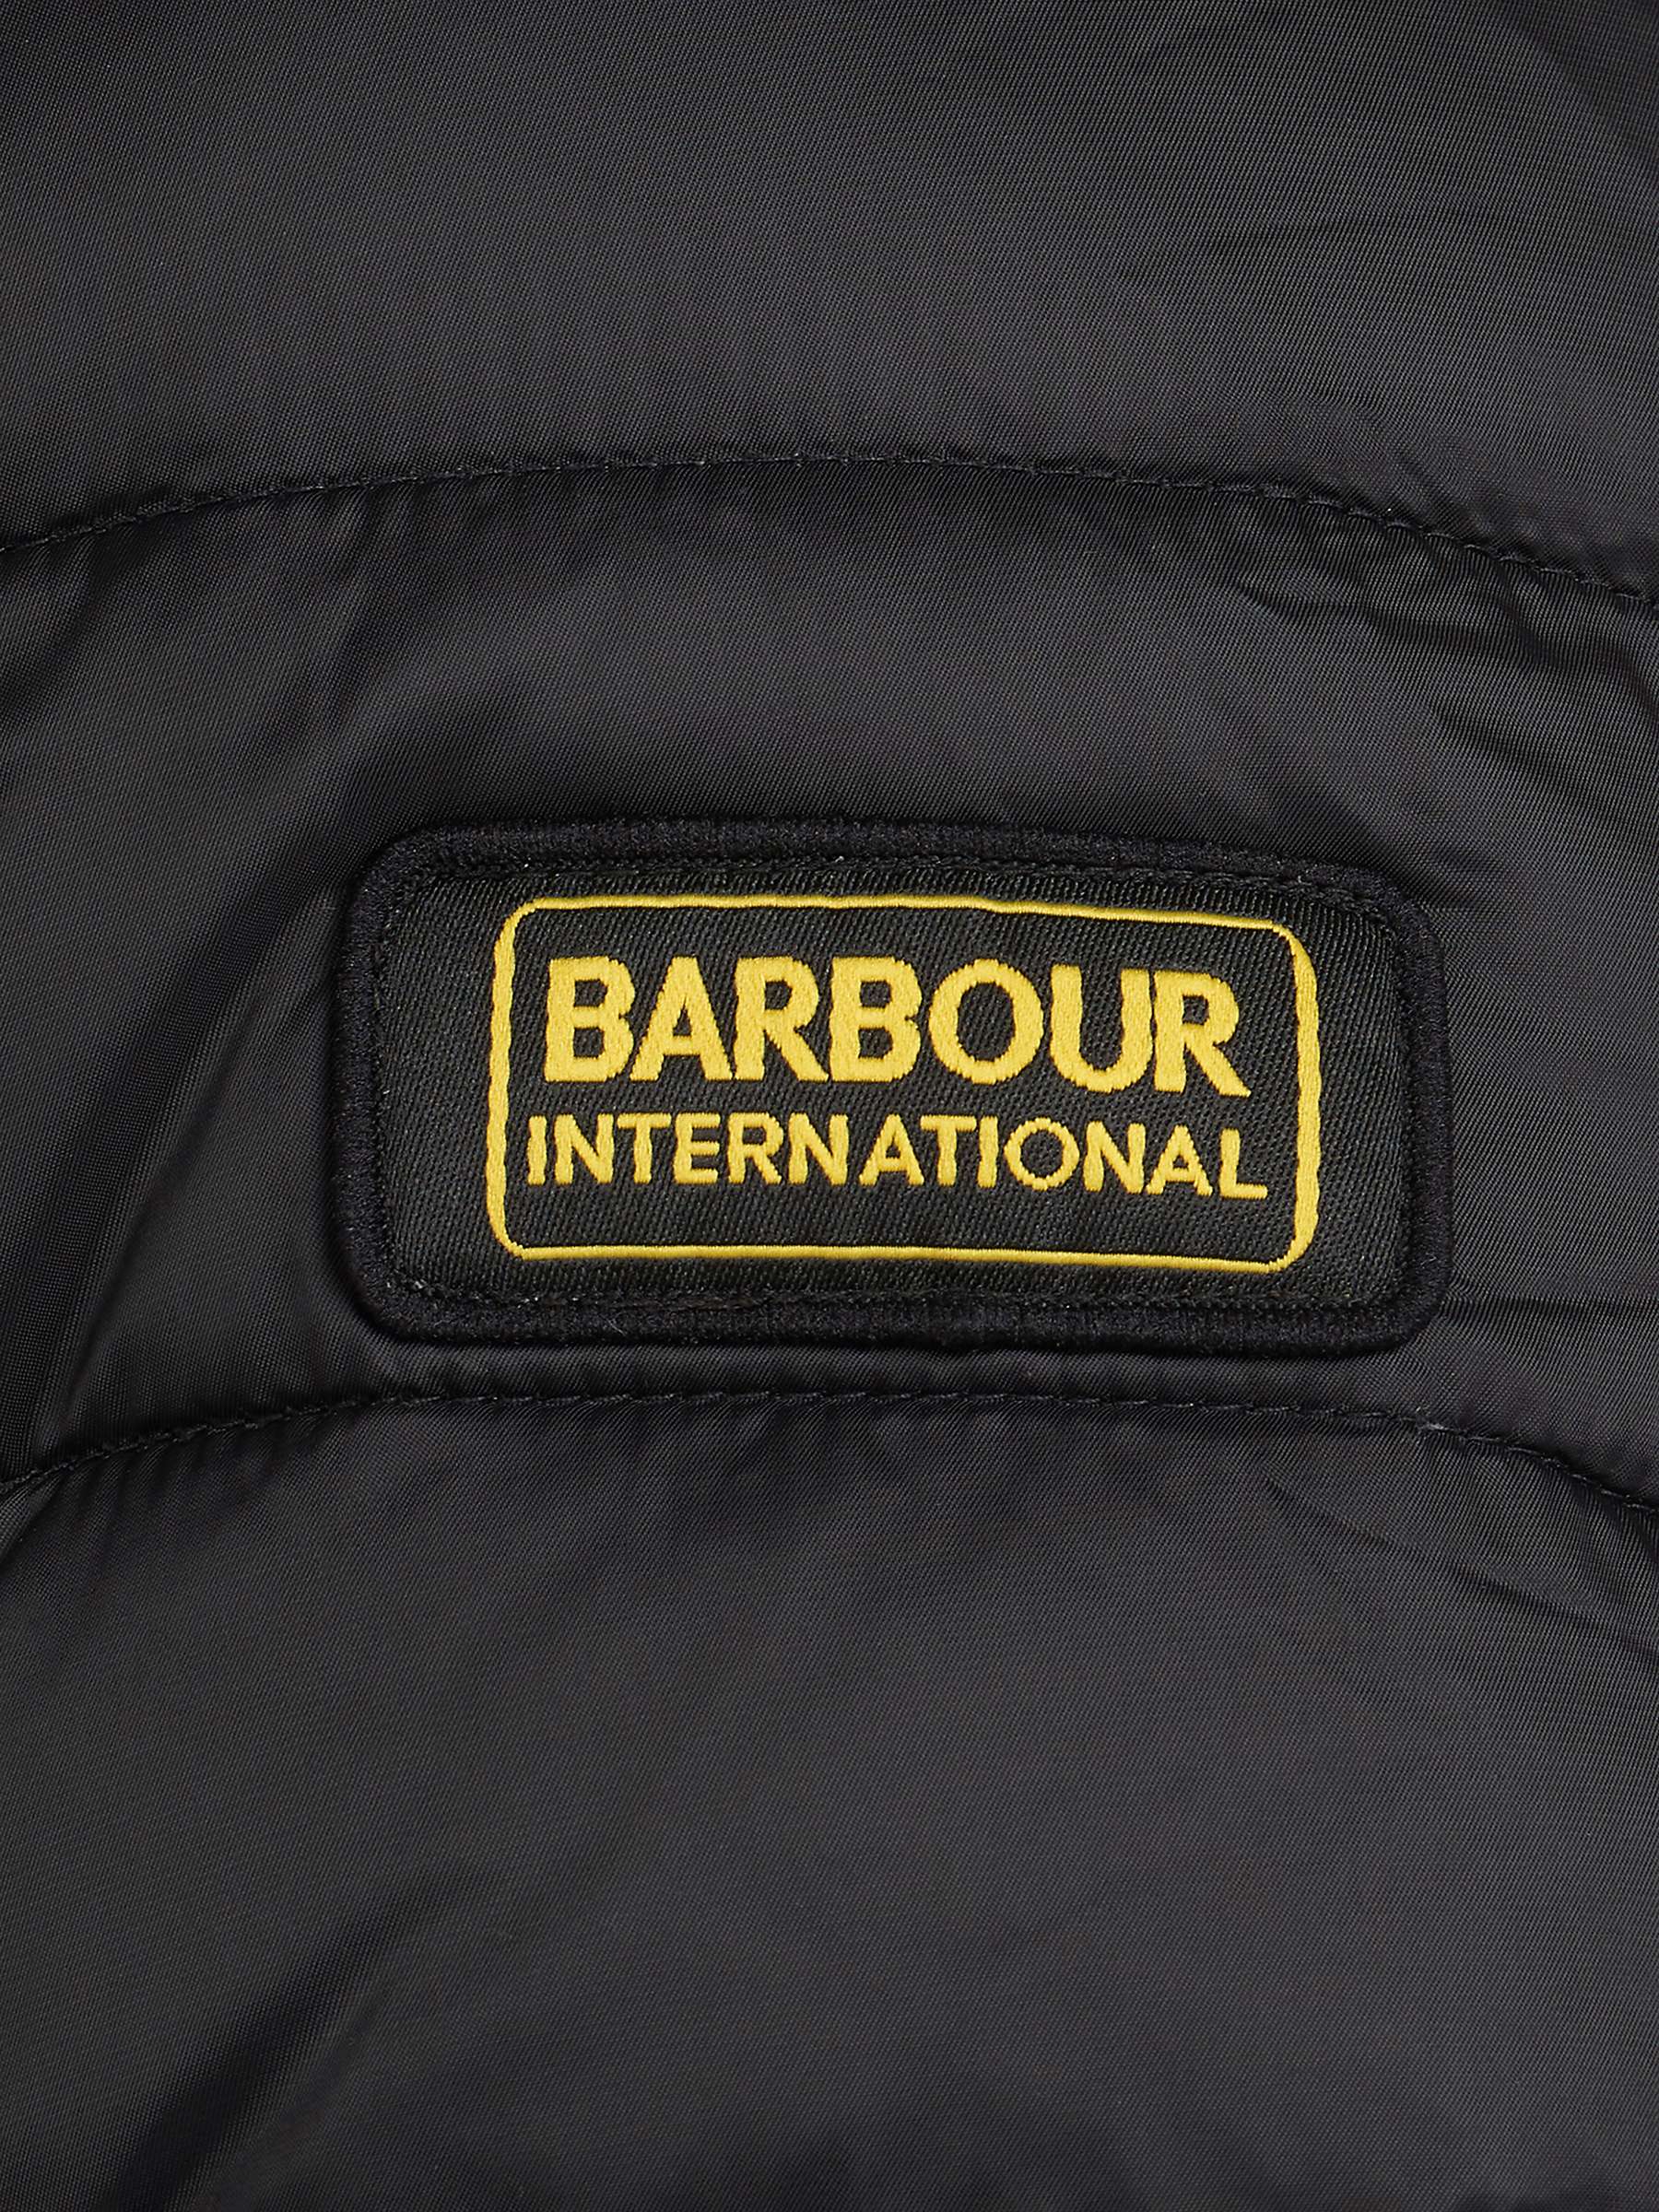 Buy Barbour International Ouston Padded Jacket, Navy Online at johnlewis.com